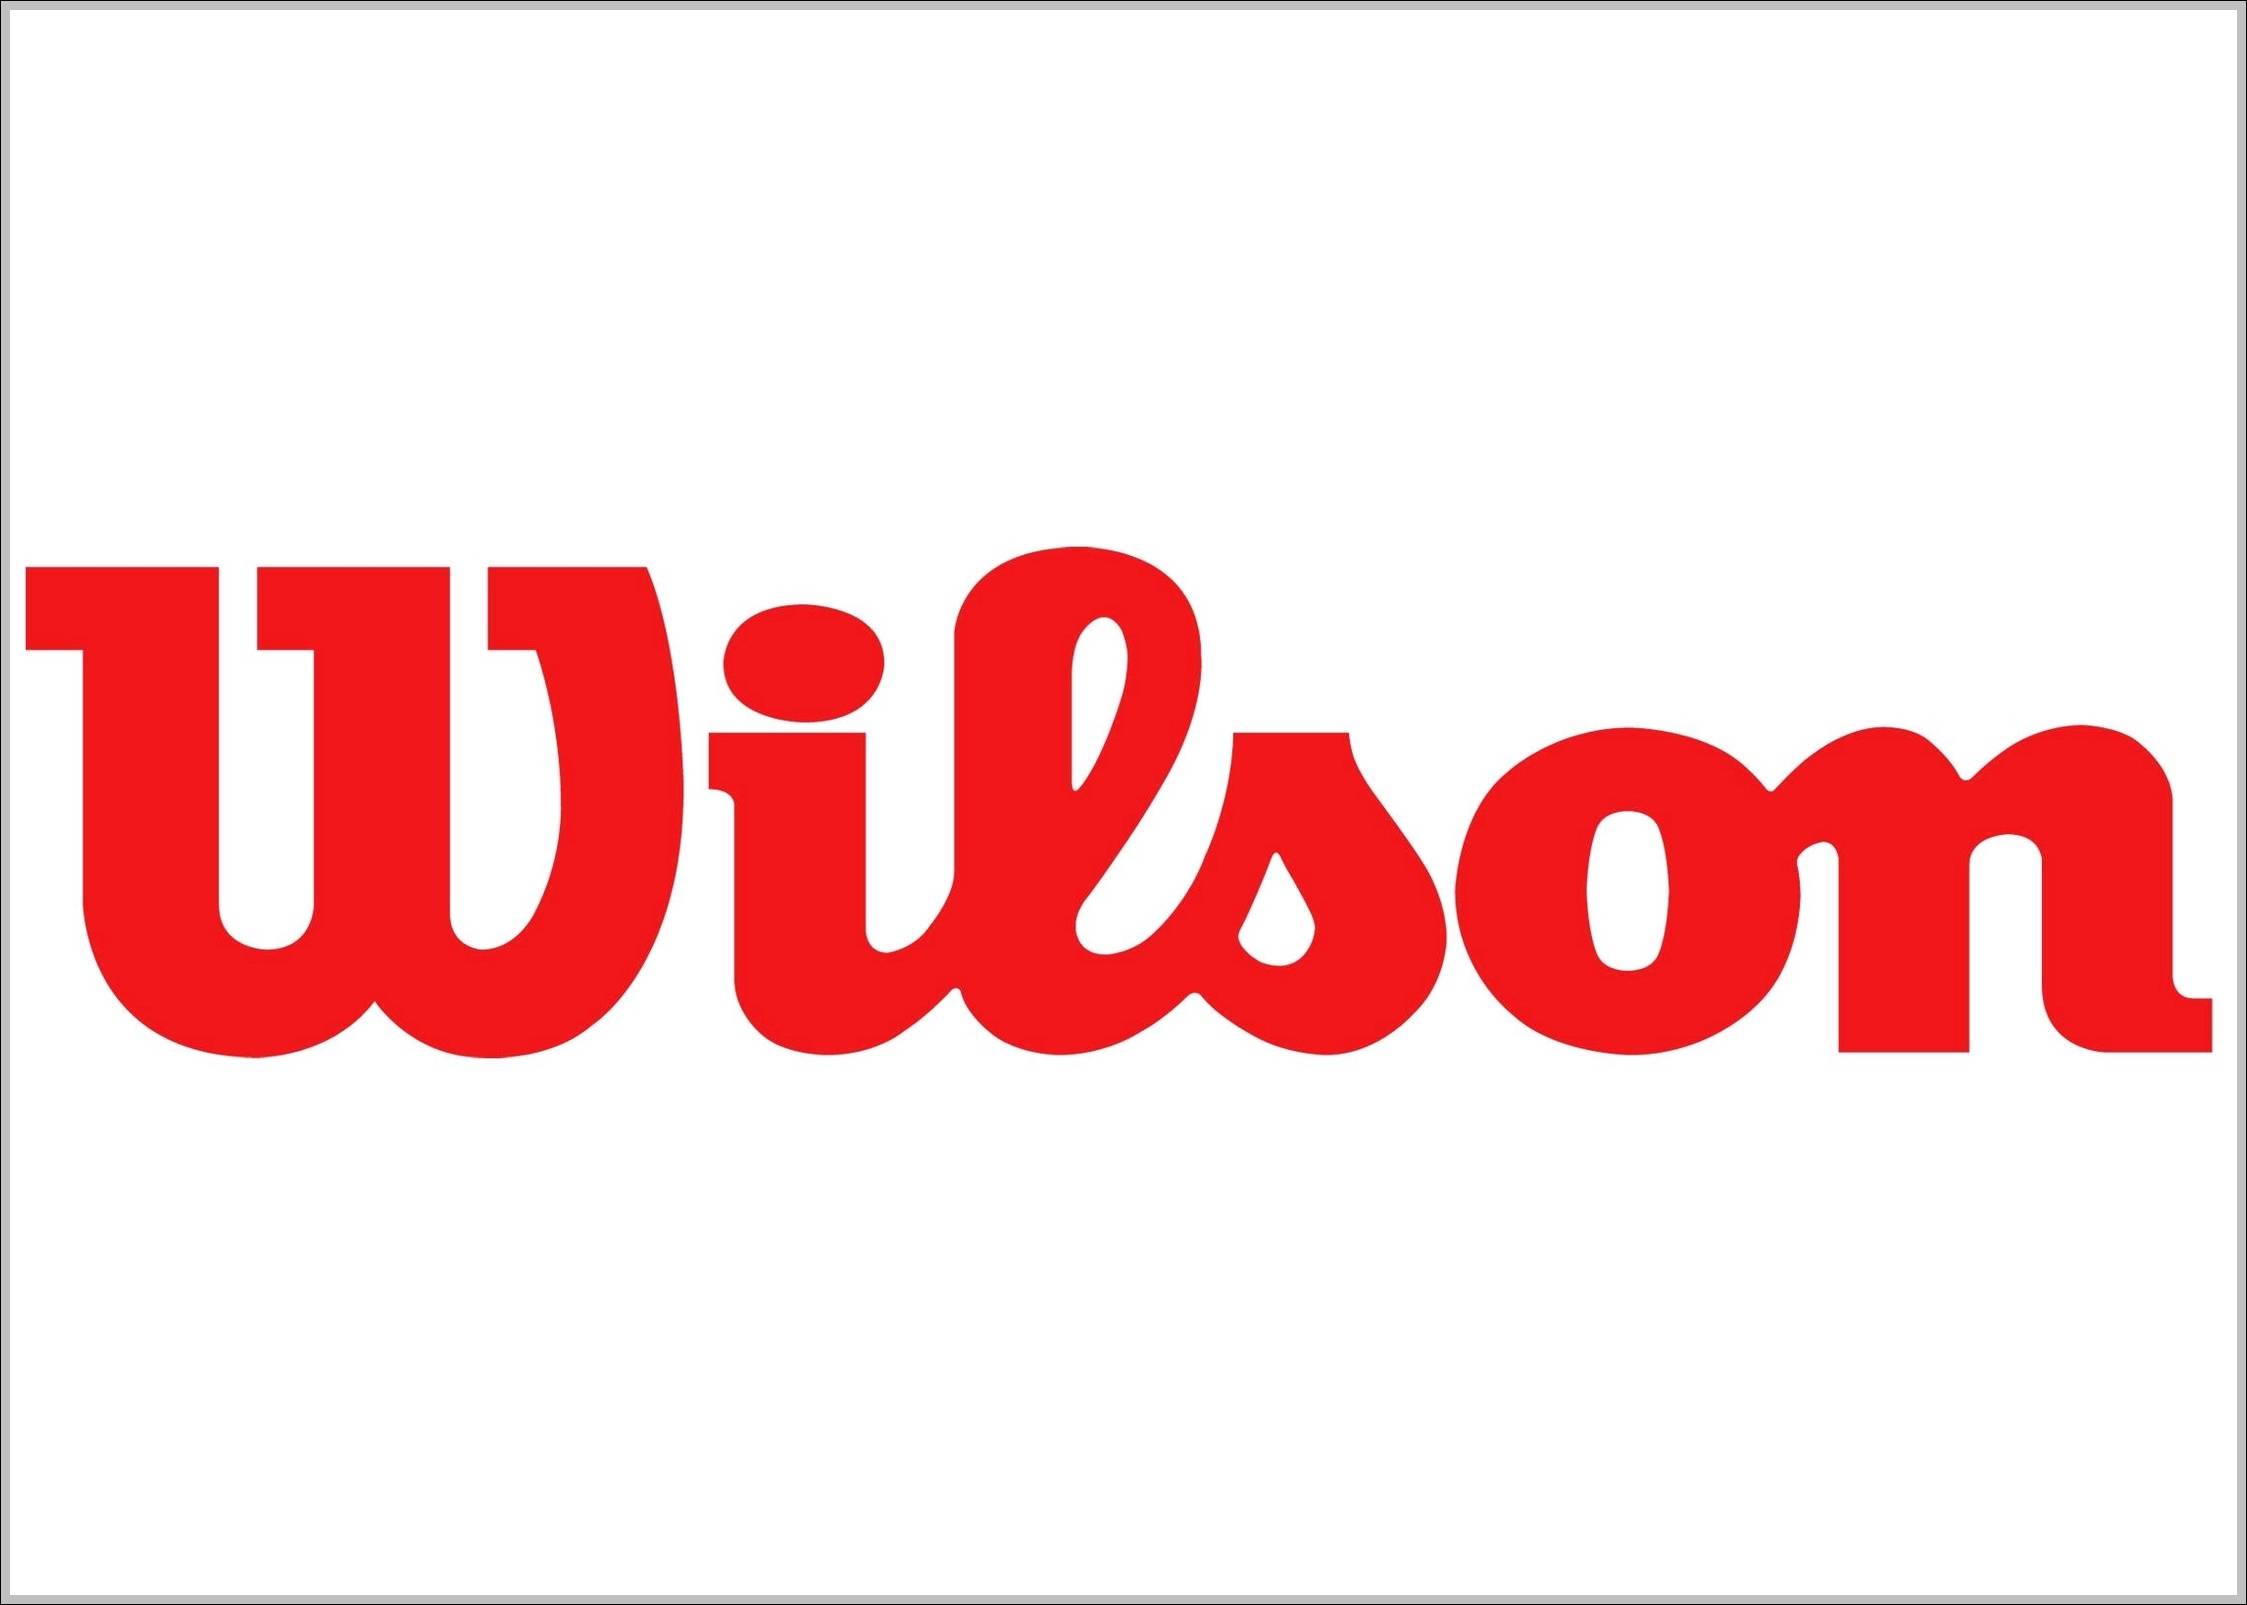 Wilson sign